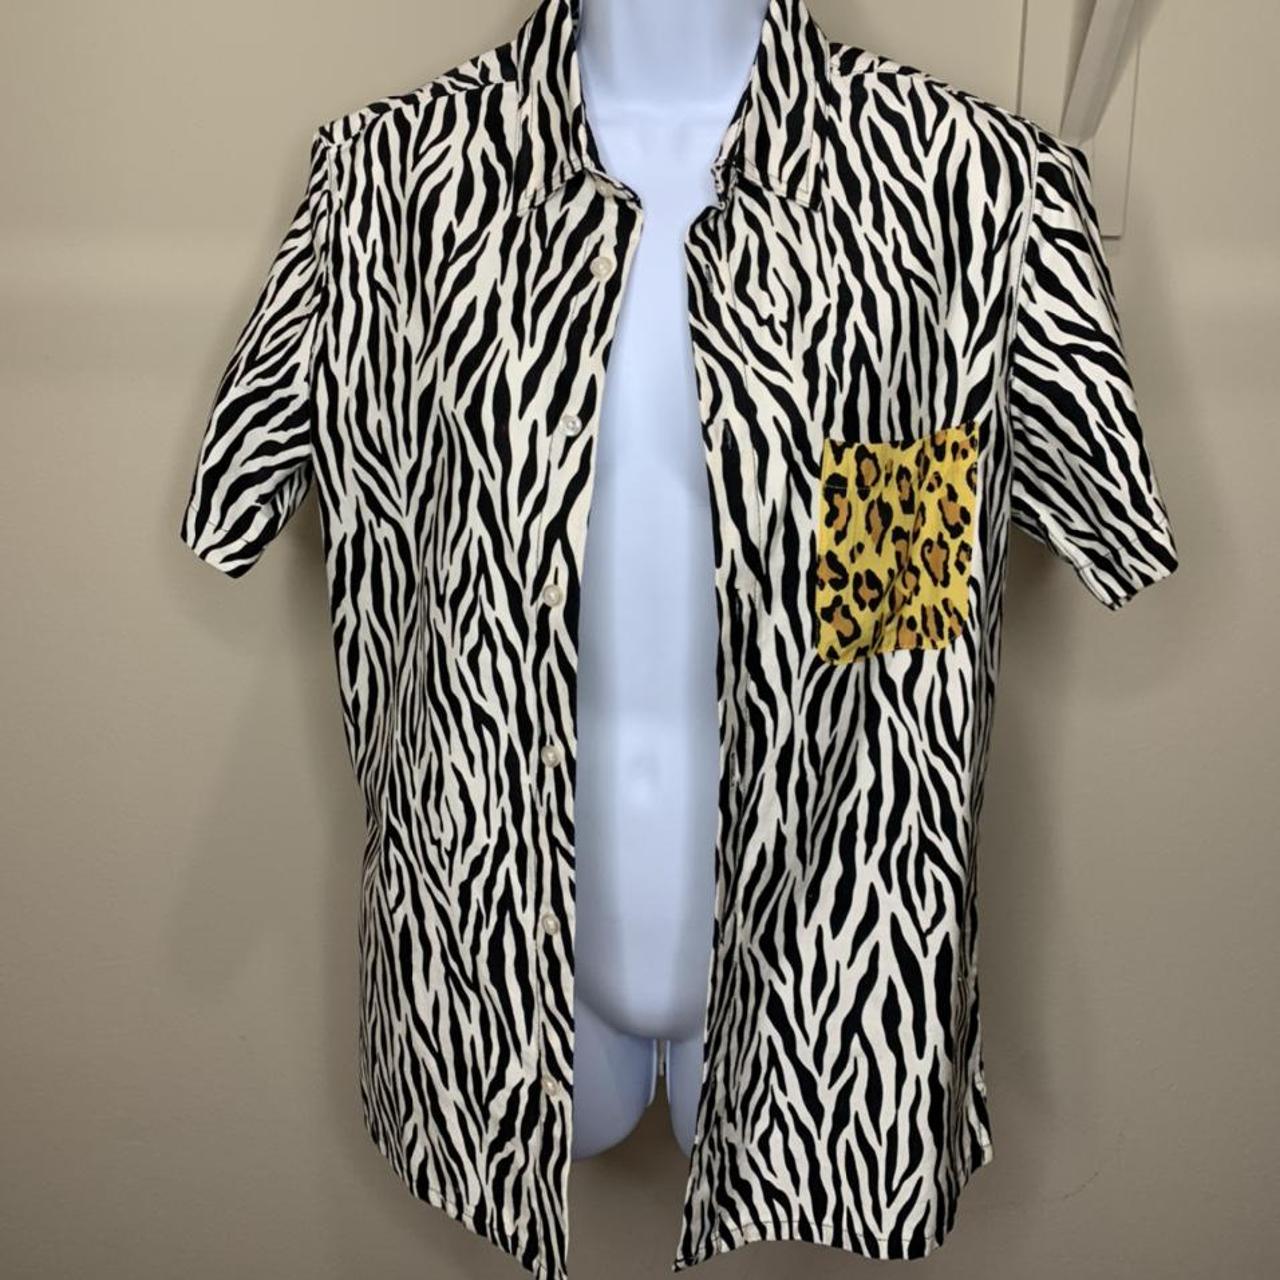 Tony zebra print button down shirt. Bought for $300.... - Depop